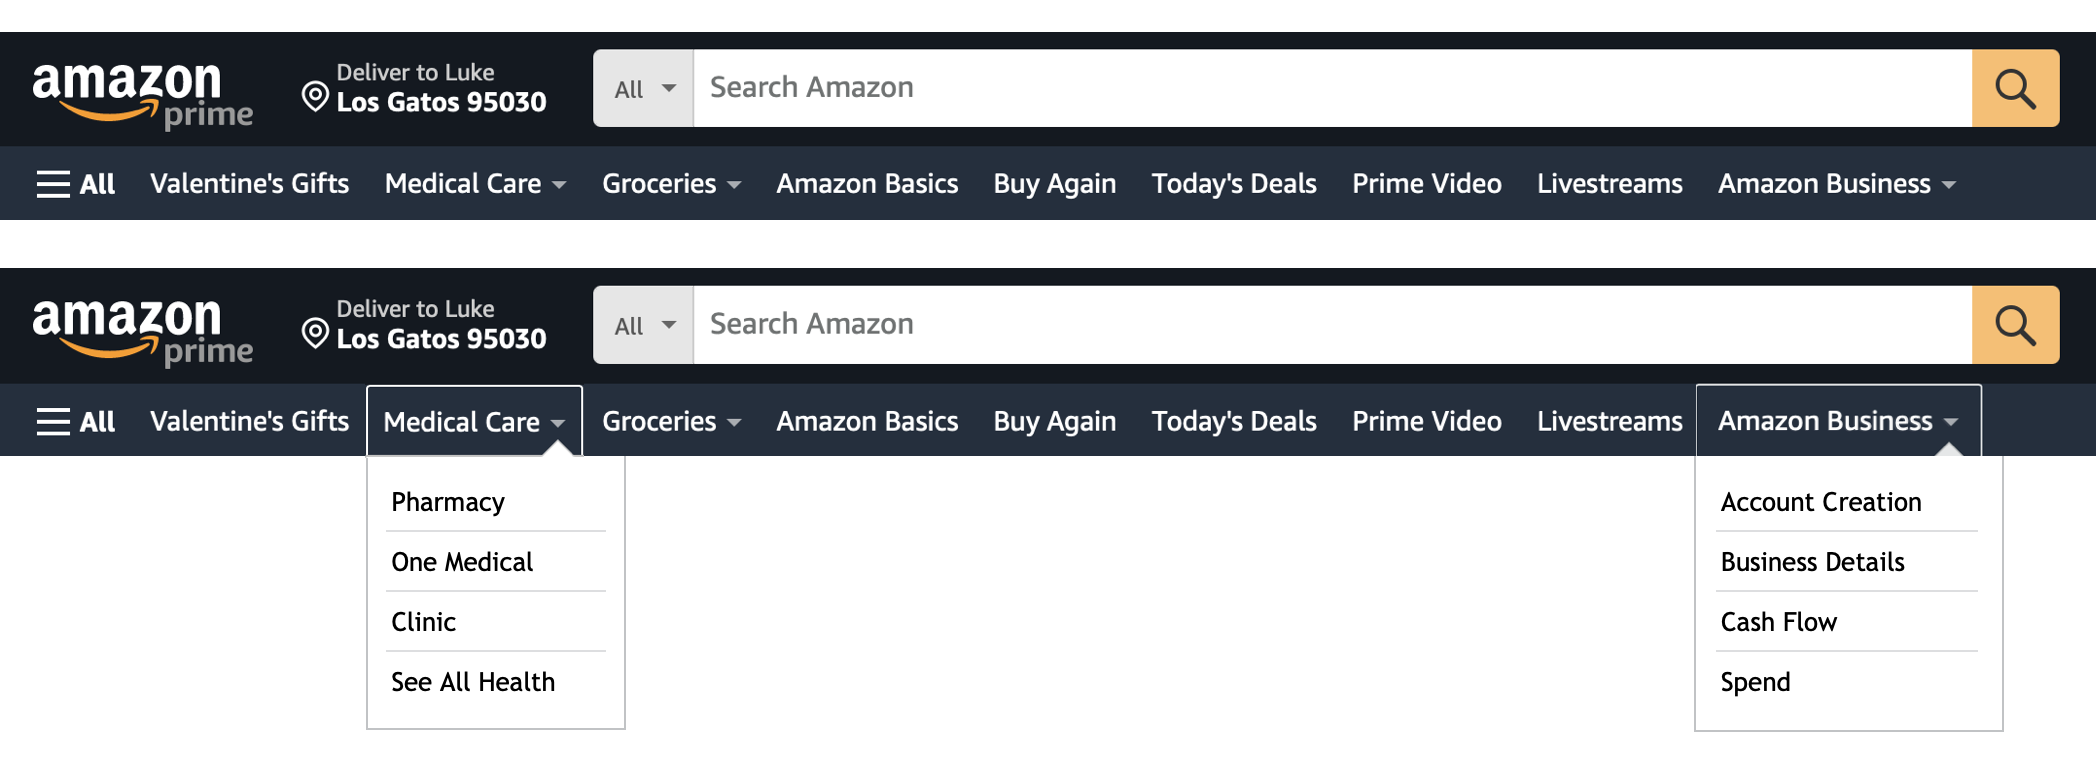 Amazon Top Level navigation menu